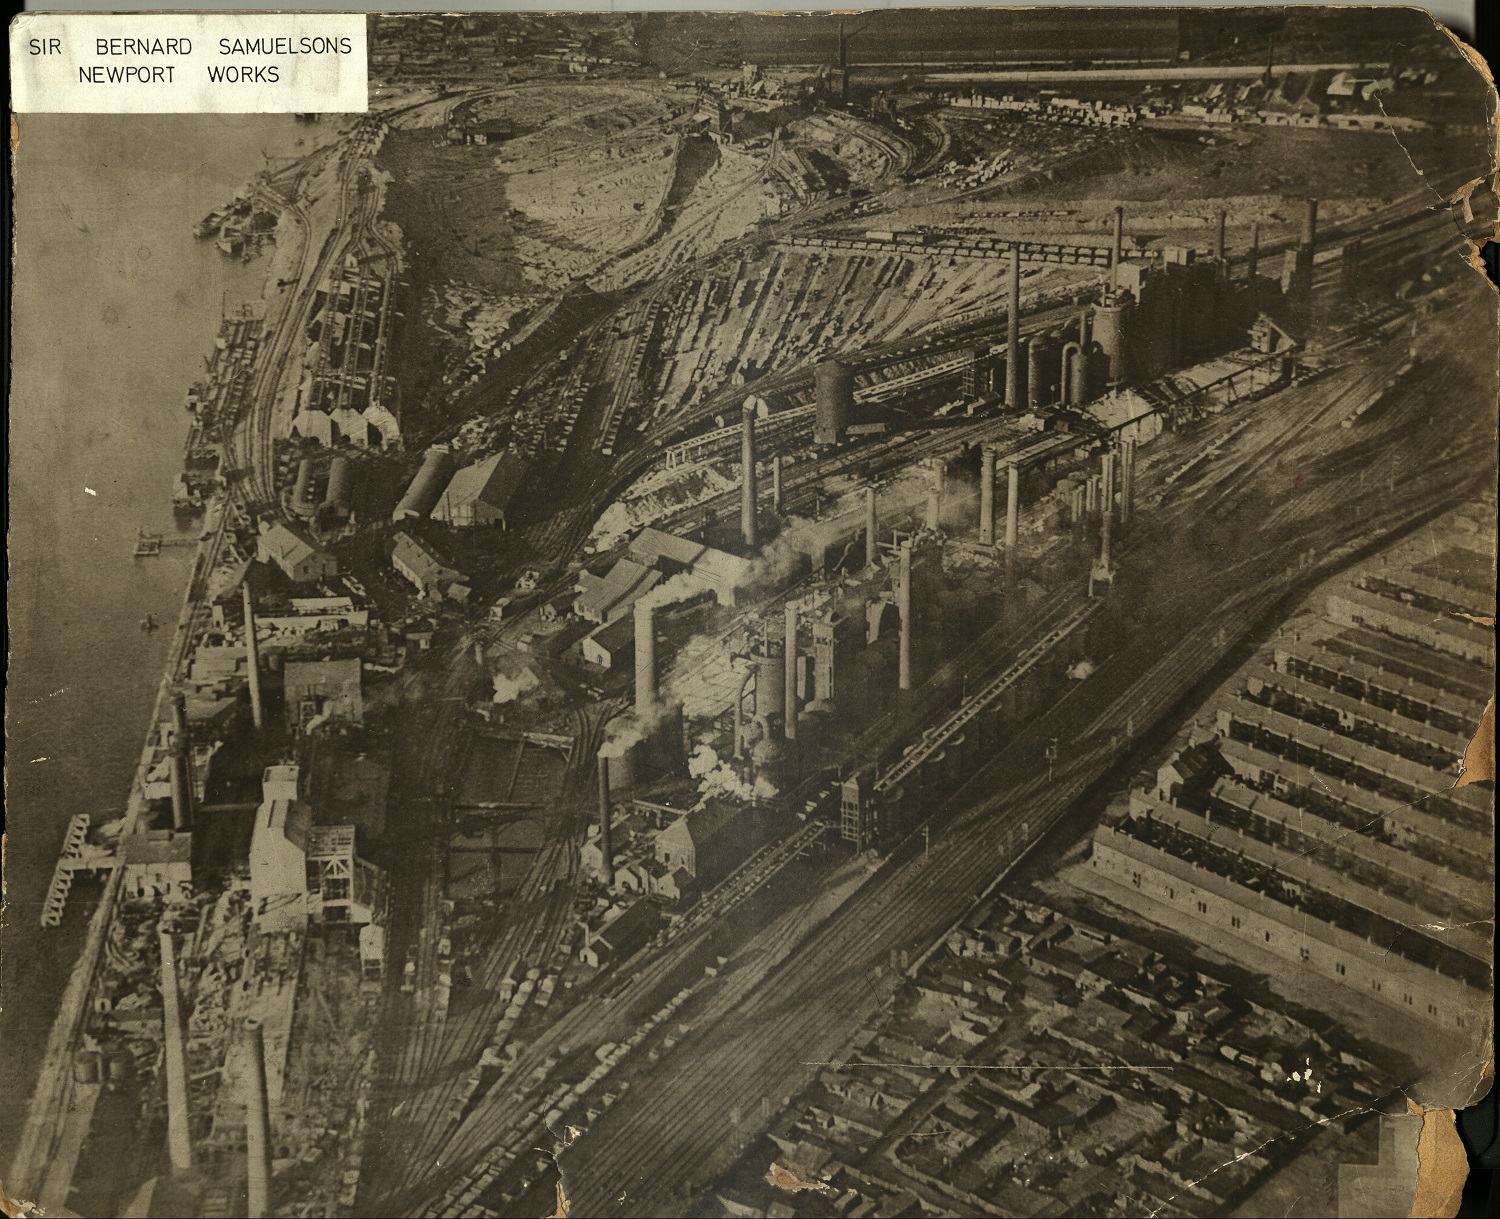 Newport Ironworks Aerial Photograph (Teesside Archives).jpg